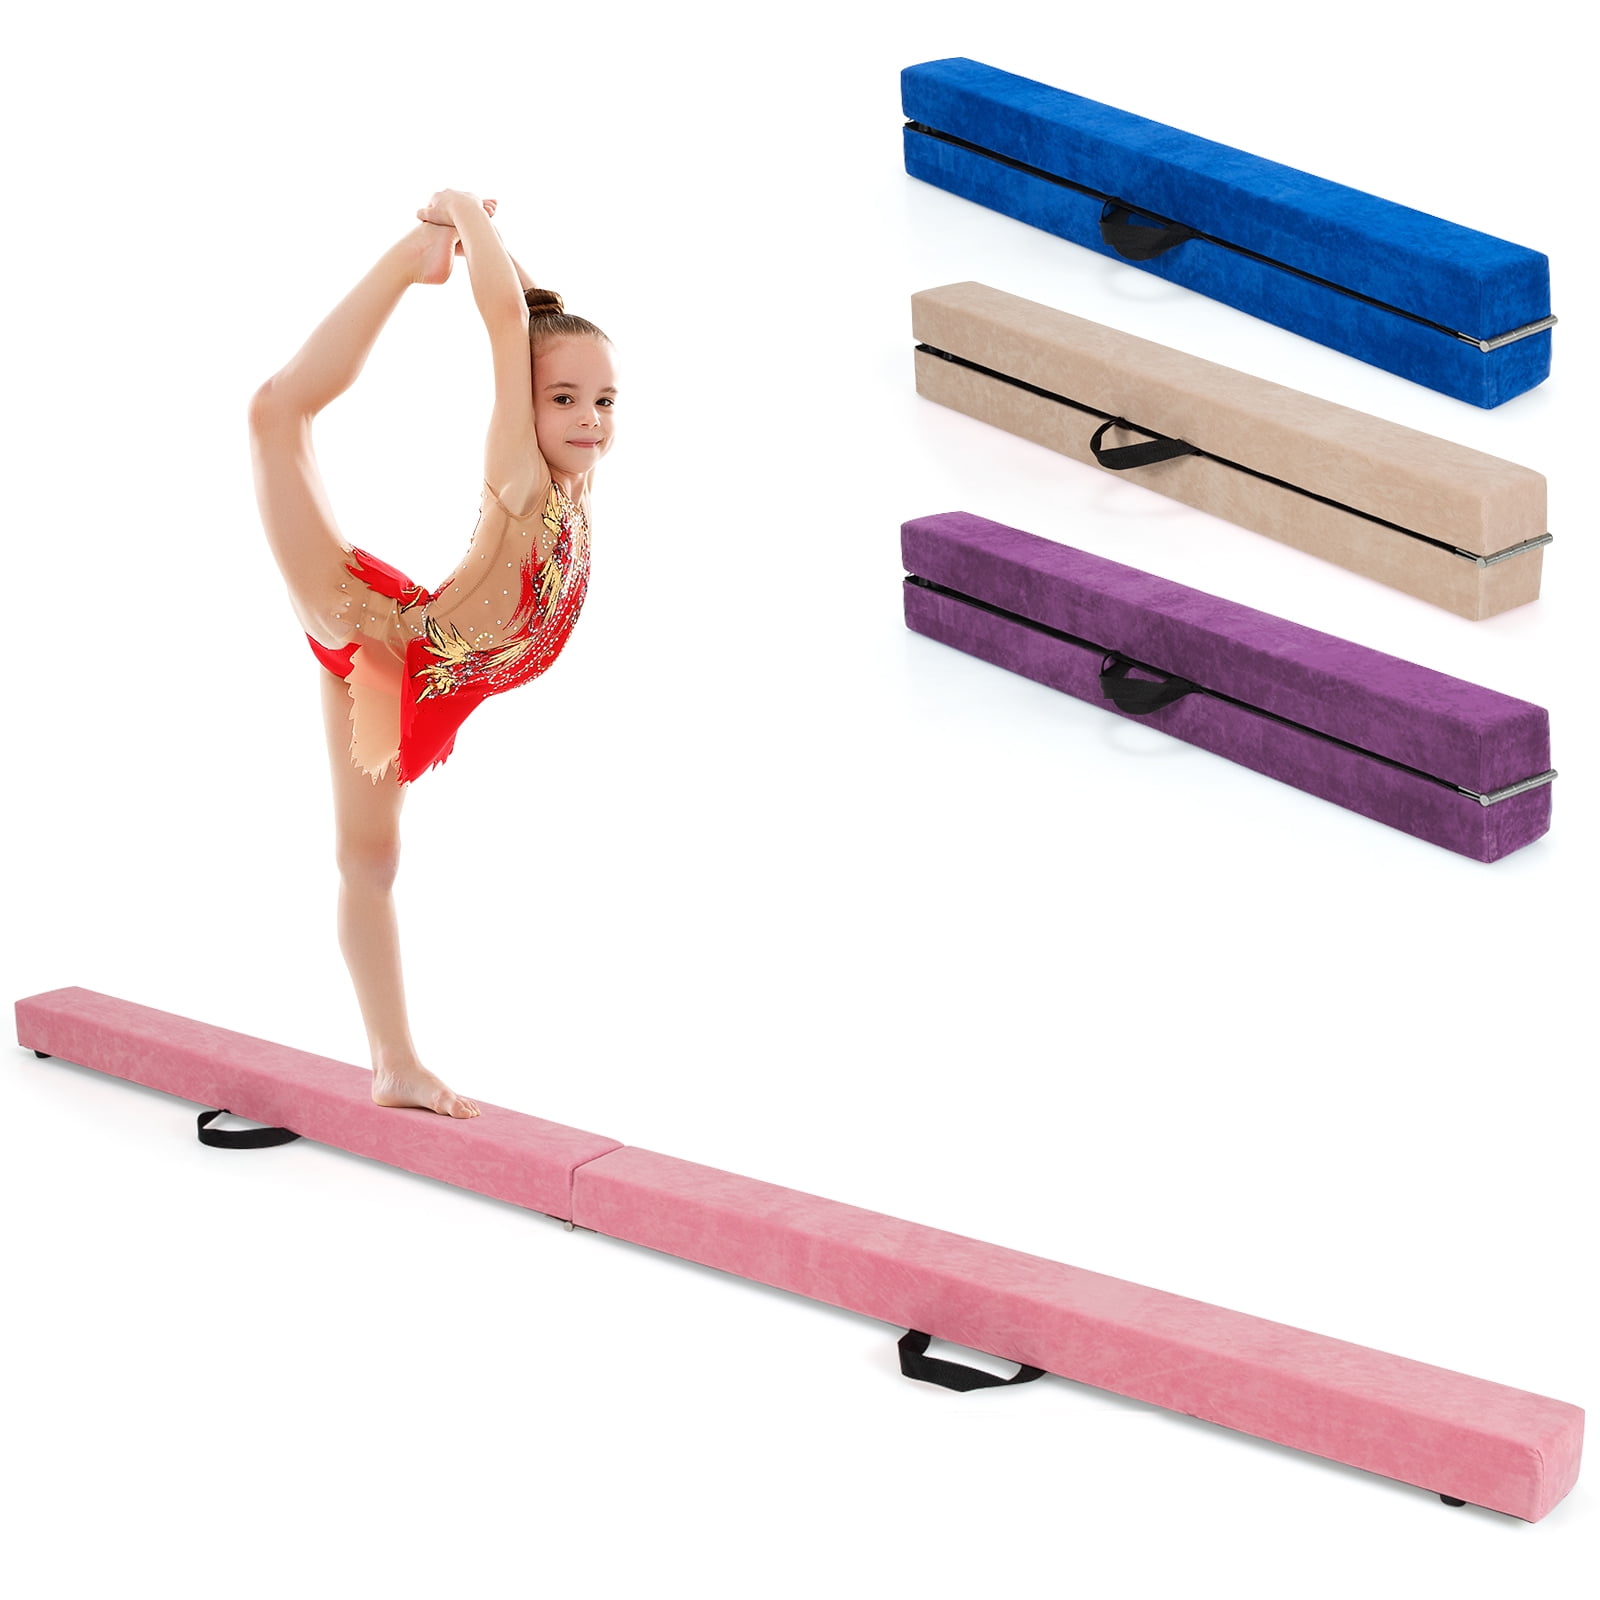 finest quality gymnastics gym balance beam purple 6FT long reduced look bargain 